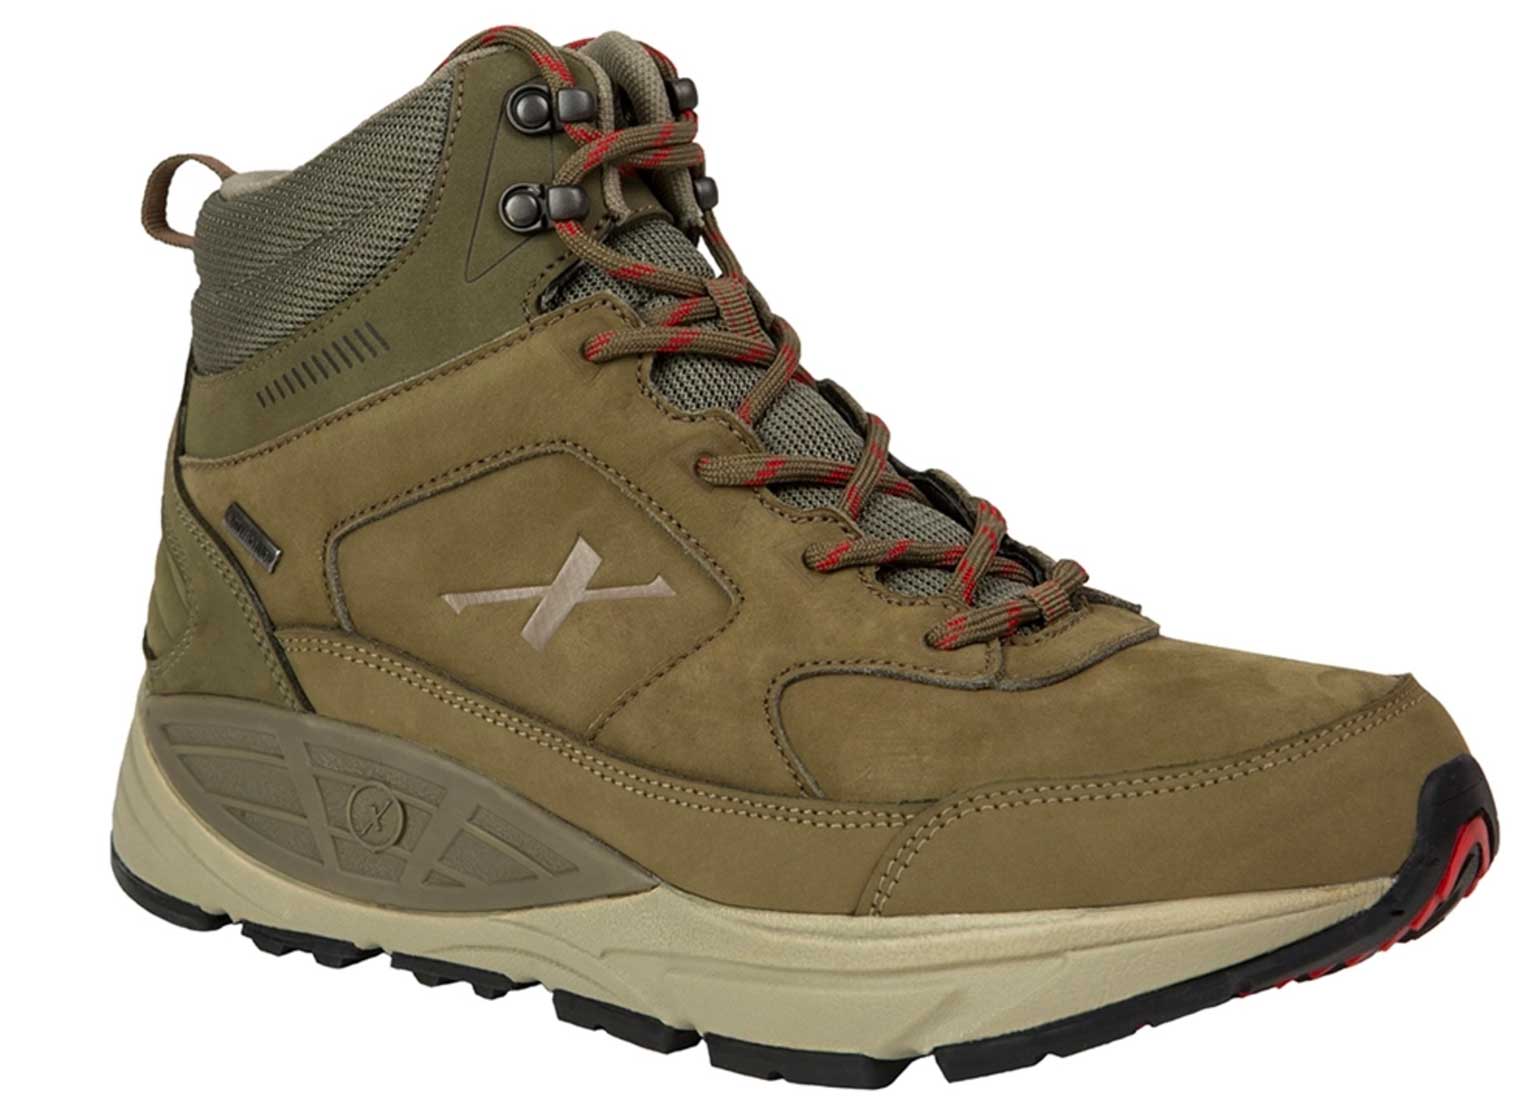 Xelero Hyperion II High X72324 - Women's 4 Comfort Boot - Outdoor Hiking Boot - Double Depth For Orthotics